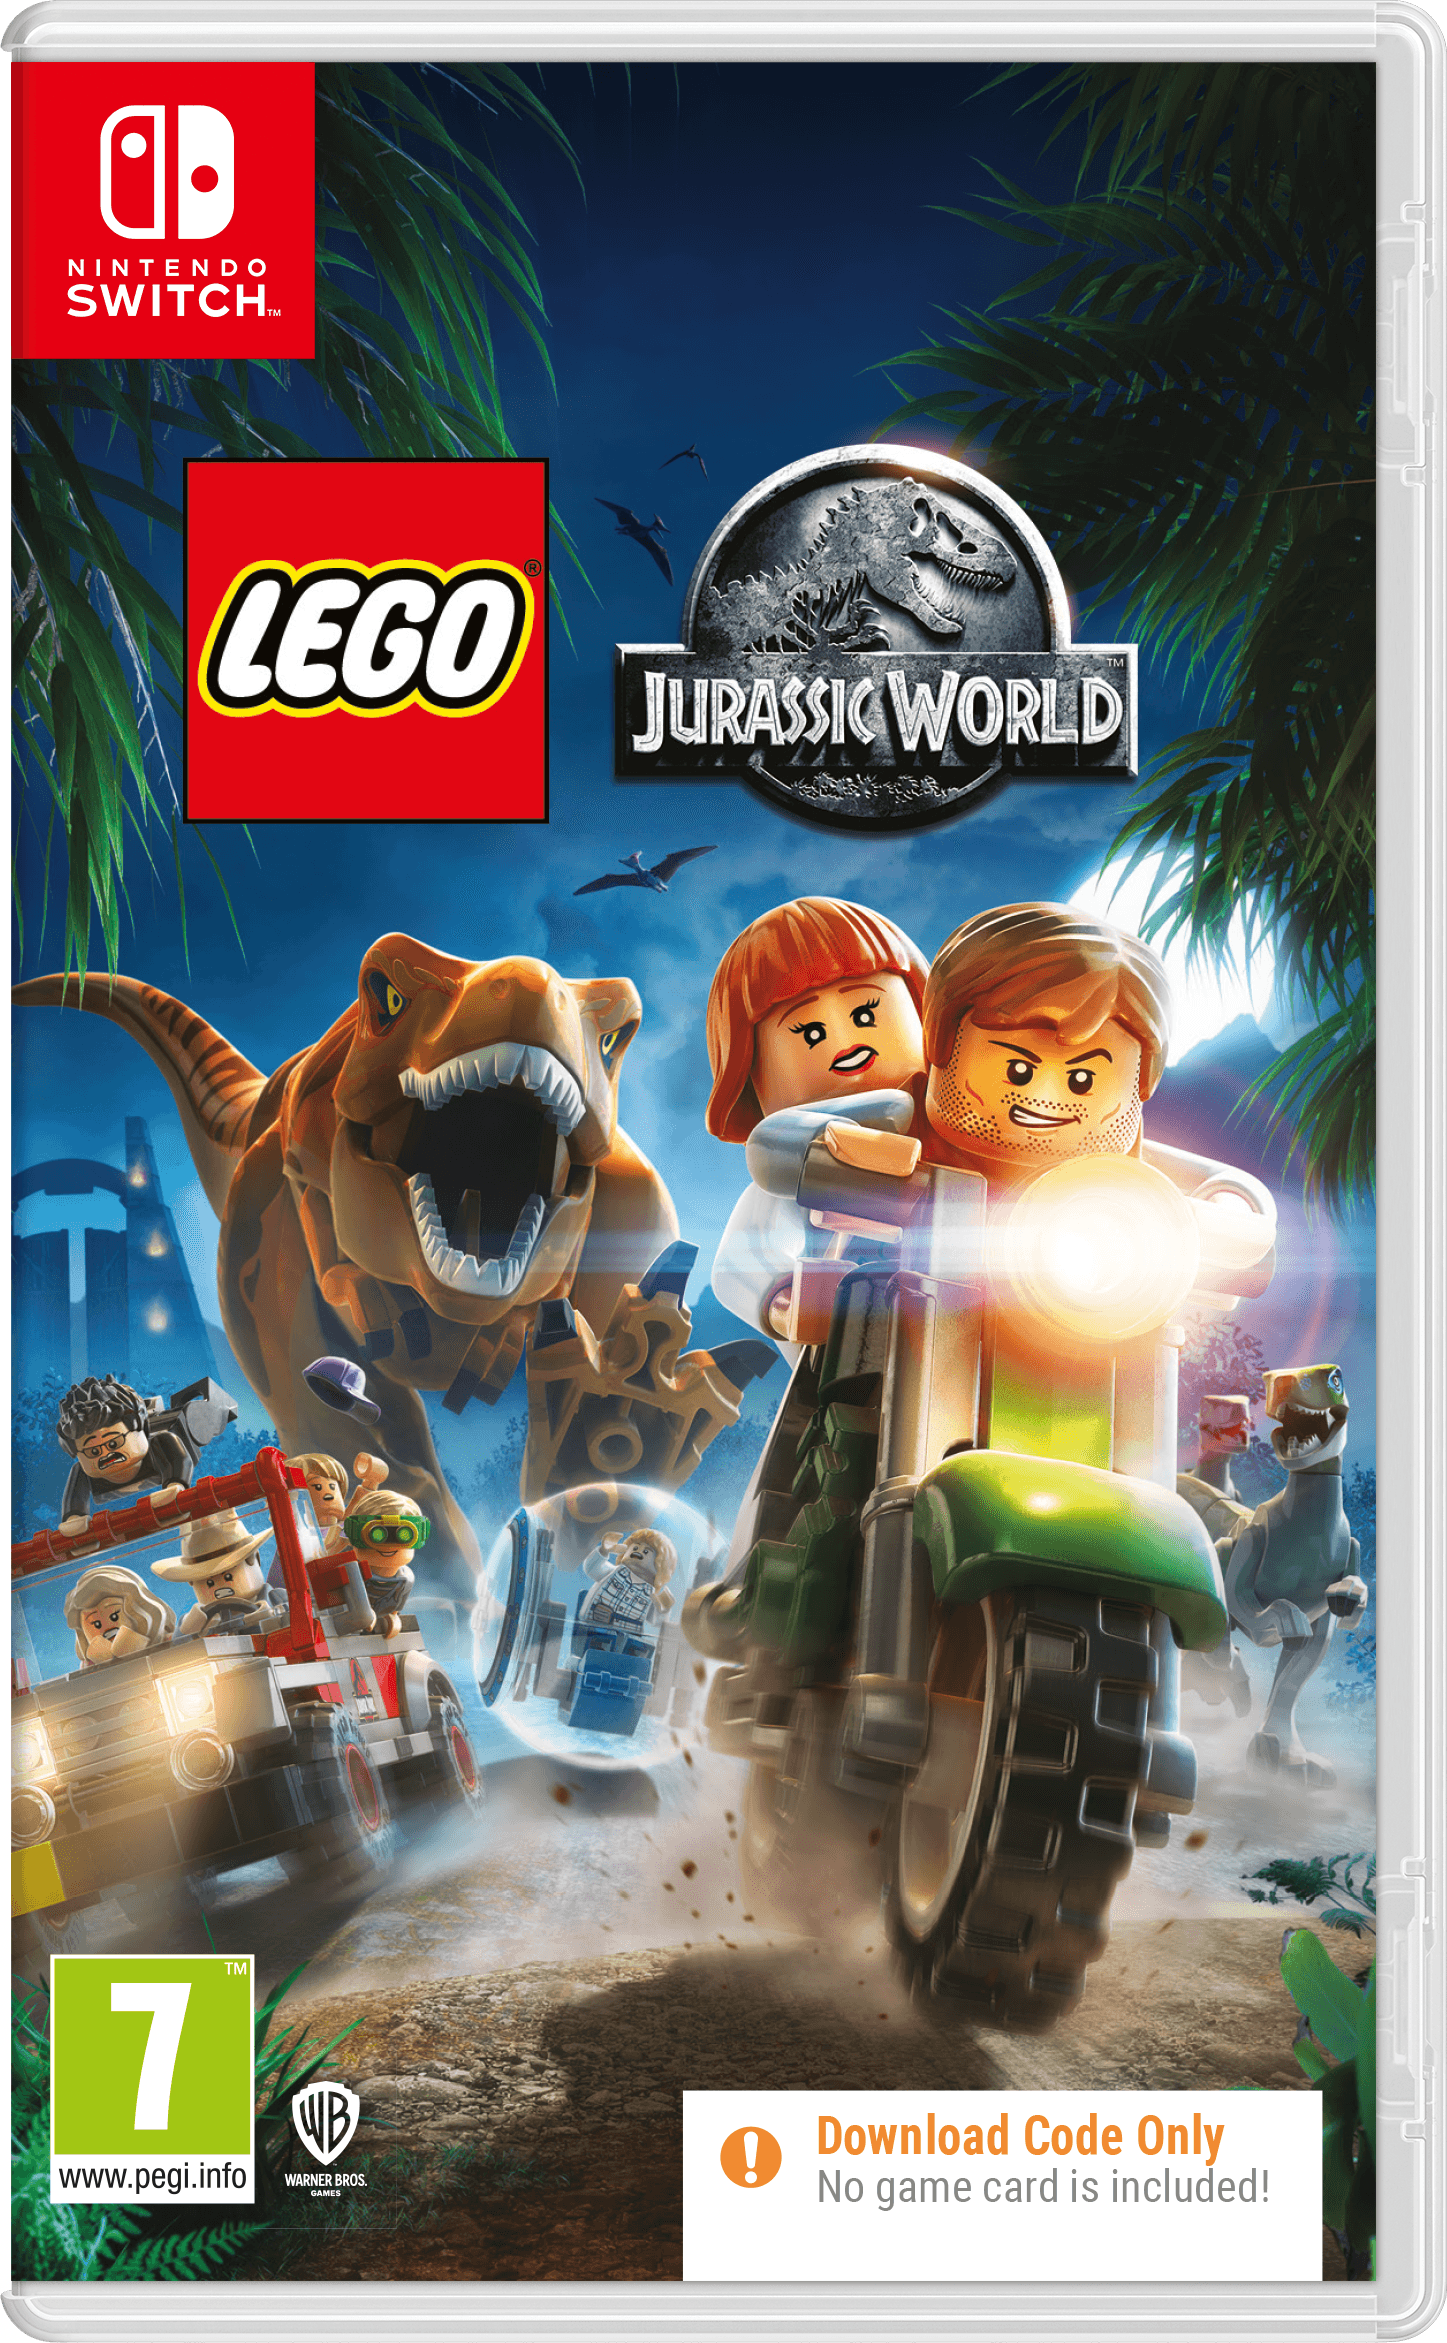 Lego Jurassic World Cib - Want a New Gadget